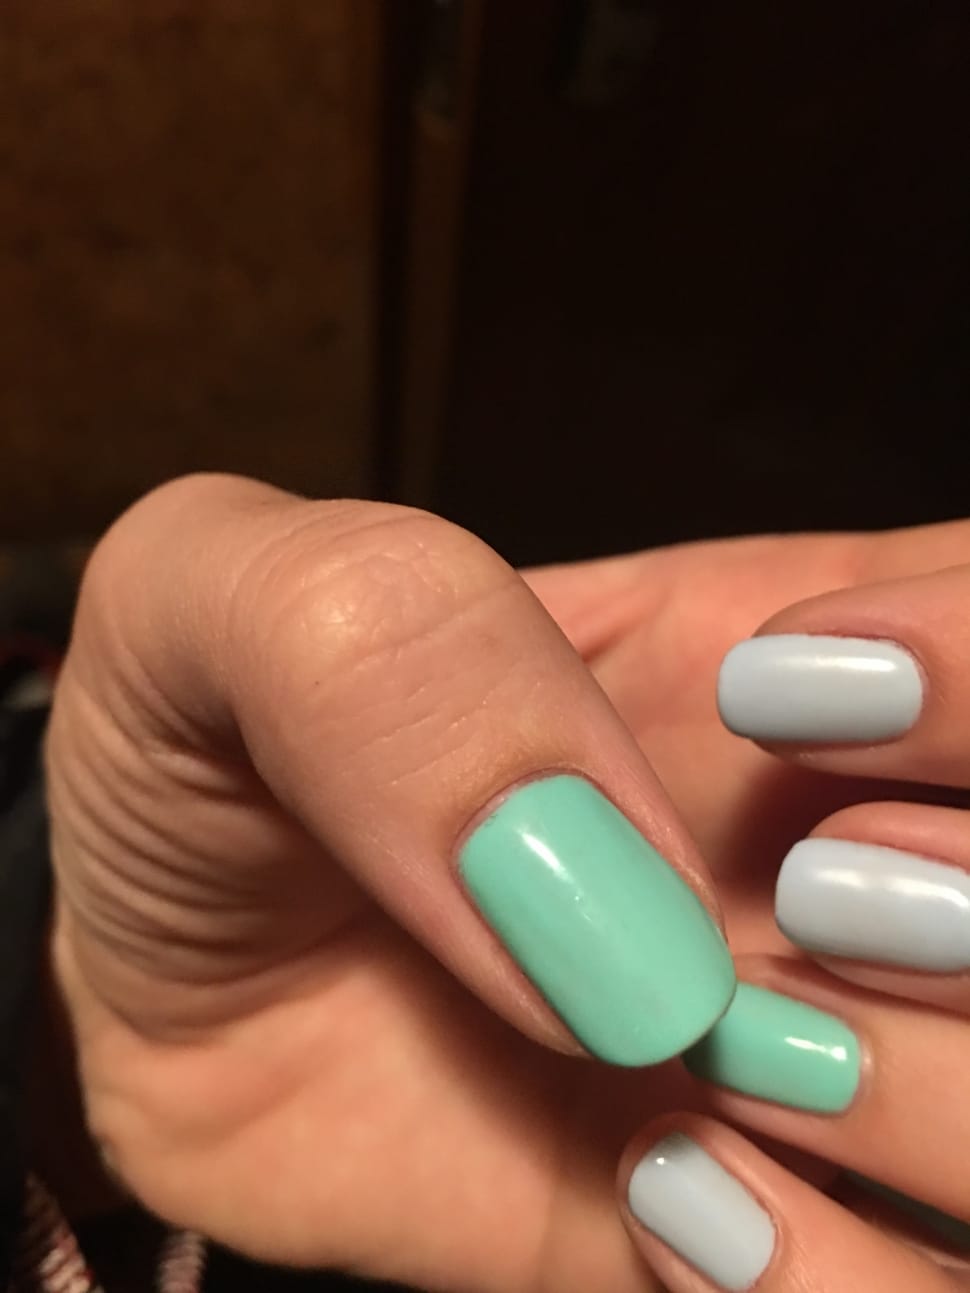 Does dark nail polish make hands look older? - Quora